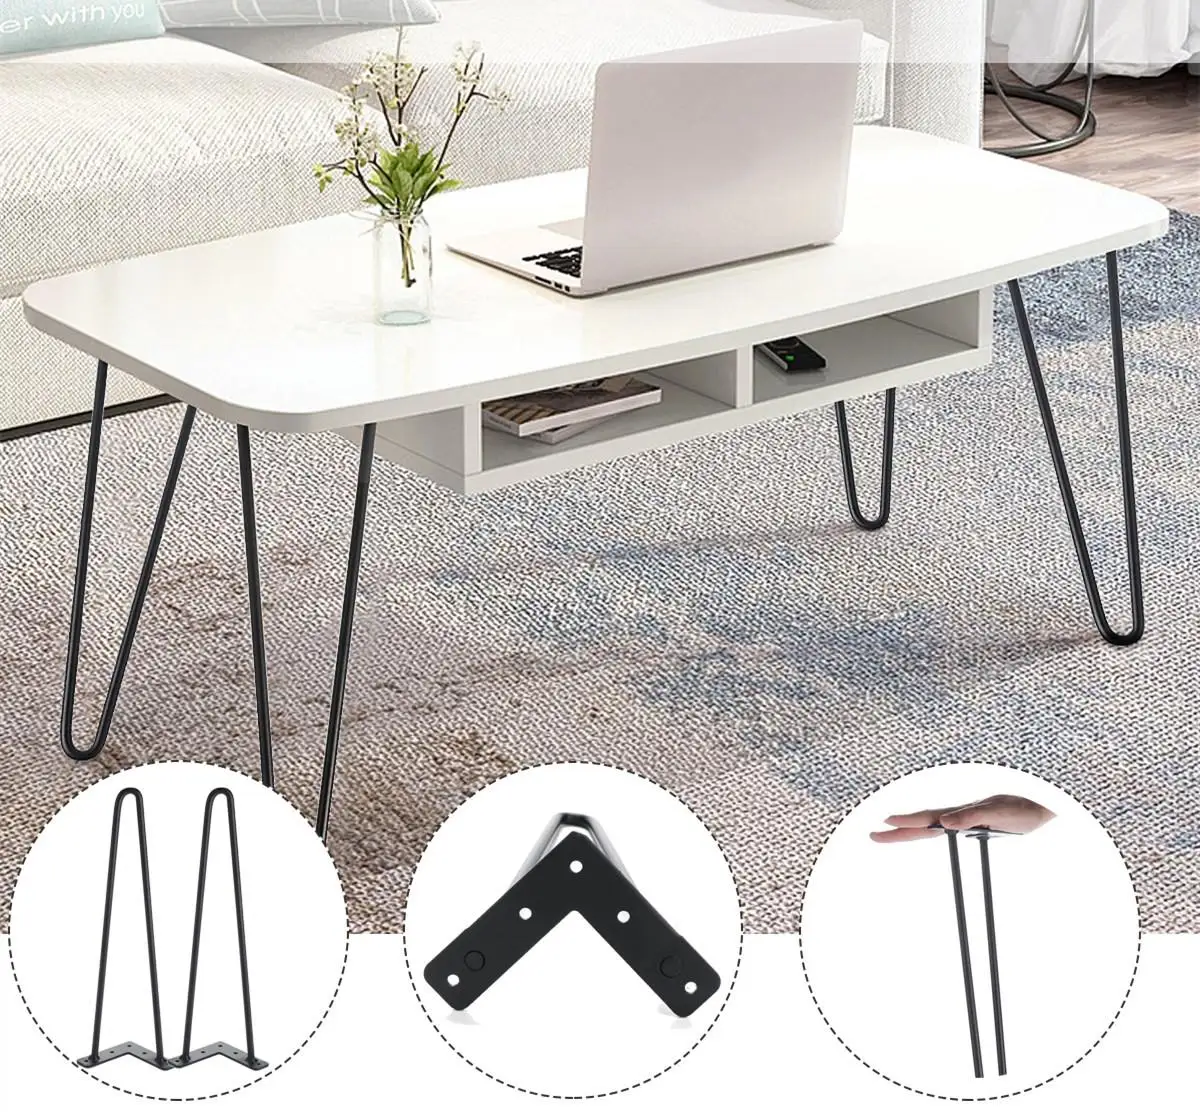 

4pcs Metal Table Desk Legs Furniture Legs 41cm Anti-Slip Hairpin Legs for Sofa Cabinet Bed Table Leg Home furniture accessories